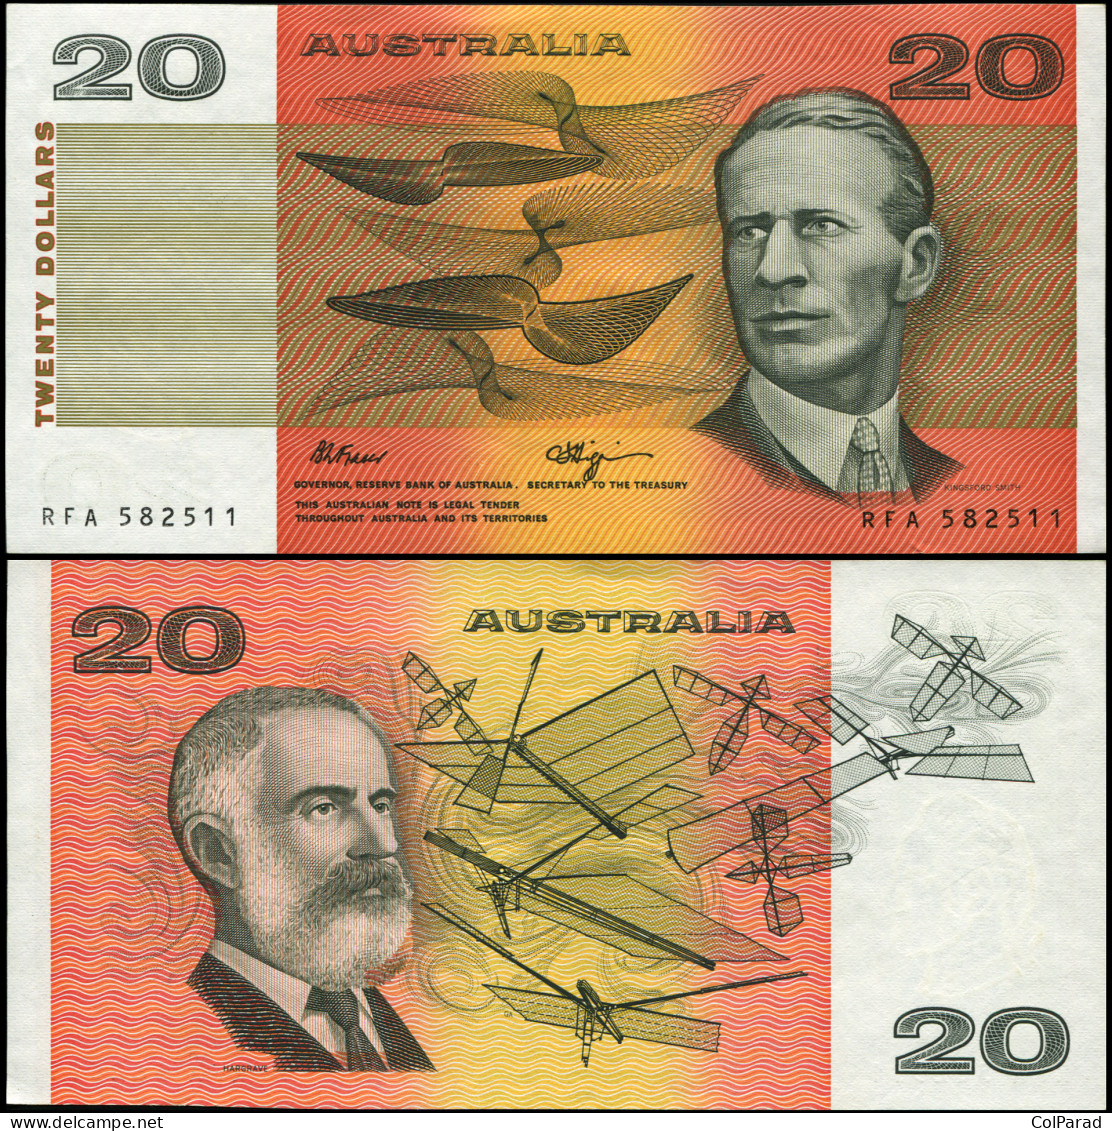 AUSTRALIA 20 DOLLARS - ND (1989) - Paper Unc - P.46i Banknote - 1974-94 Australia Reserve Bank (papier)